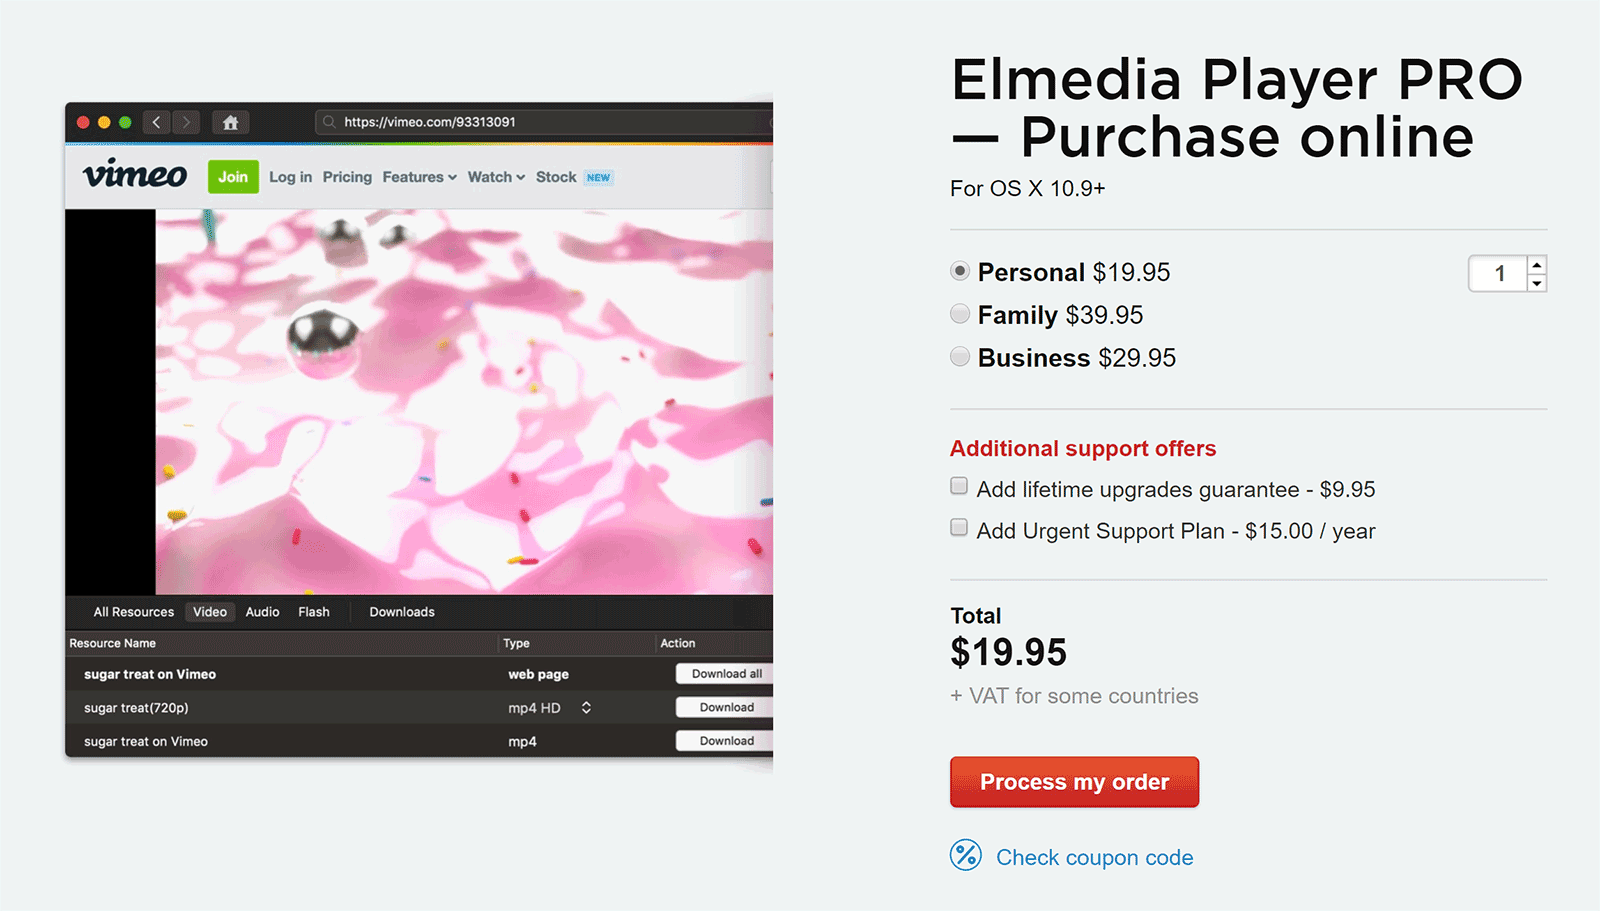 Elmedia Player Pro